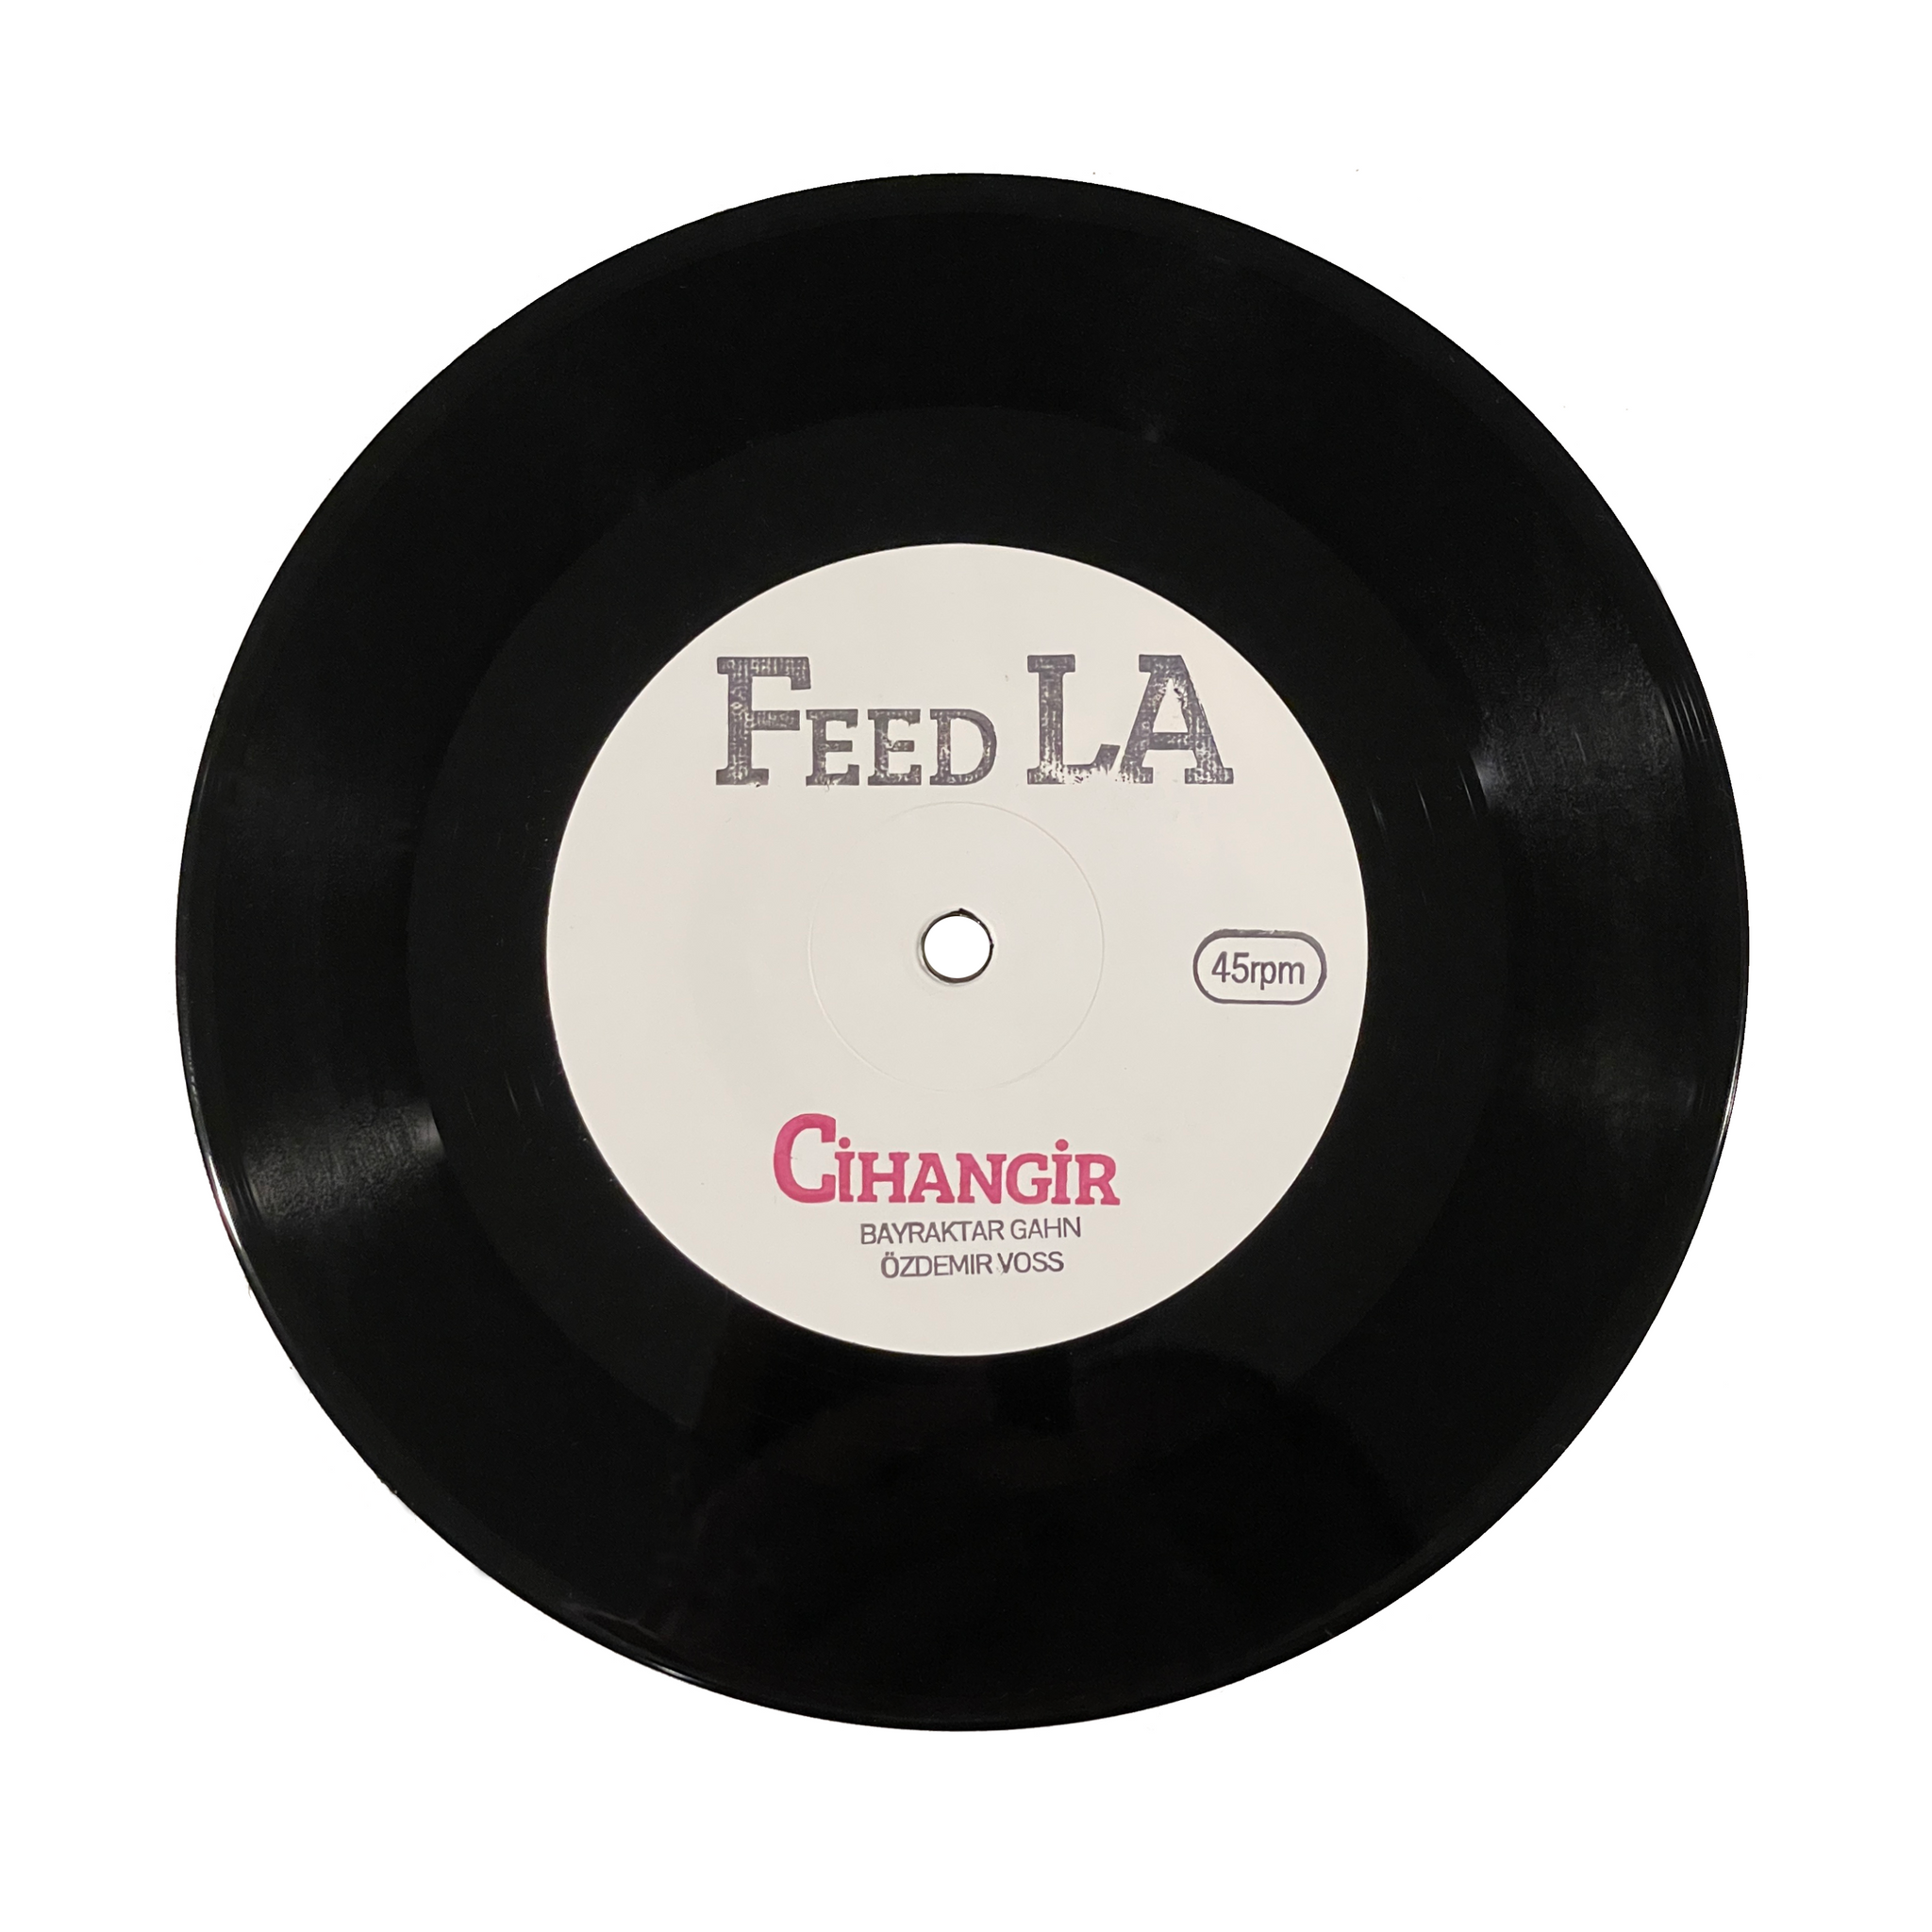 Feed LA - Cihangir 7" [JAZZ / FREE POP]